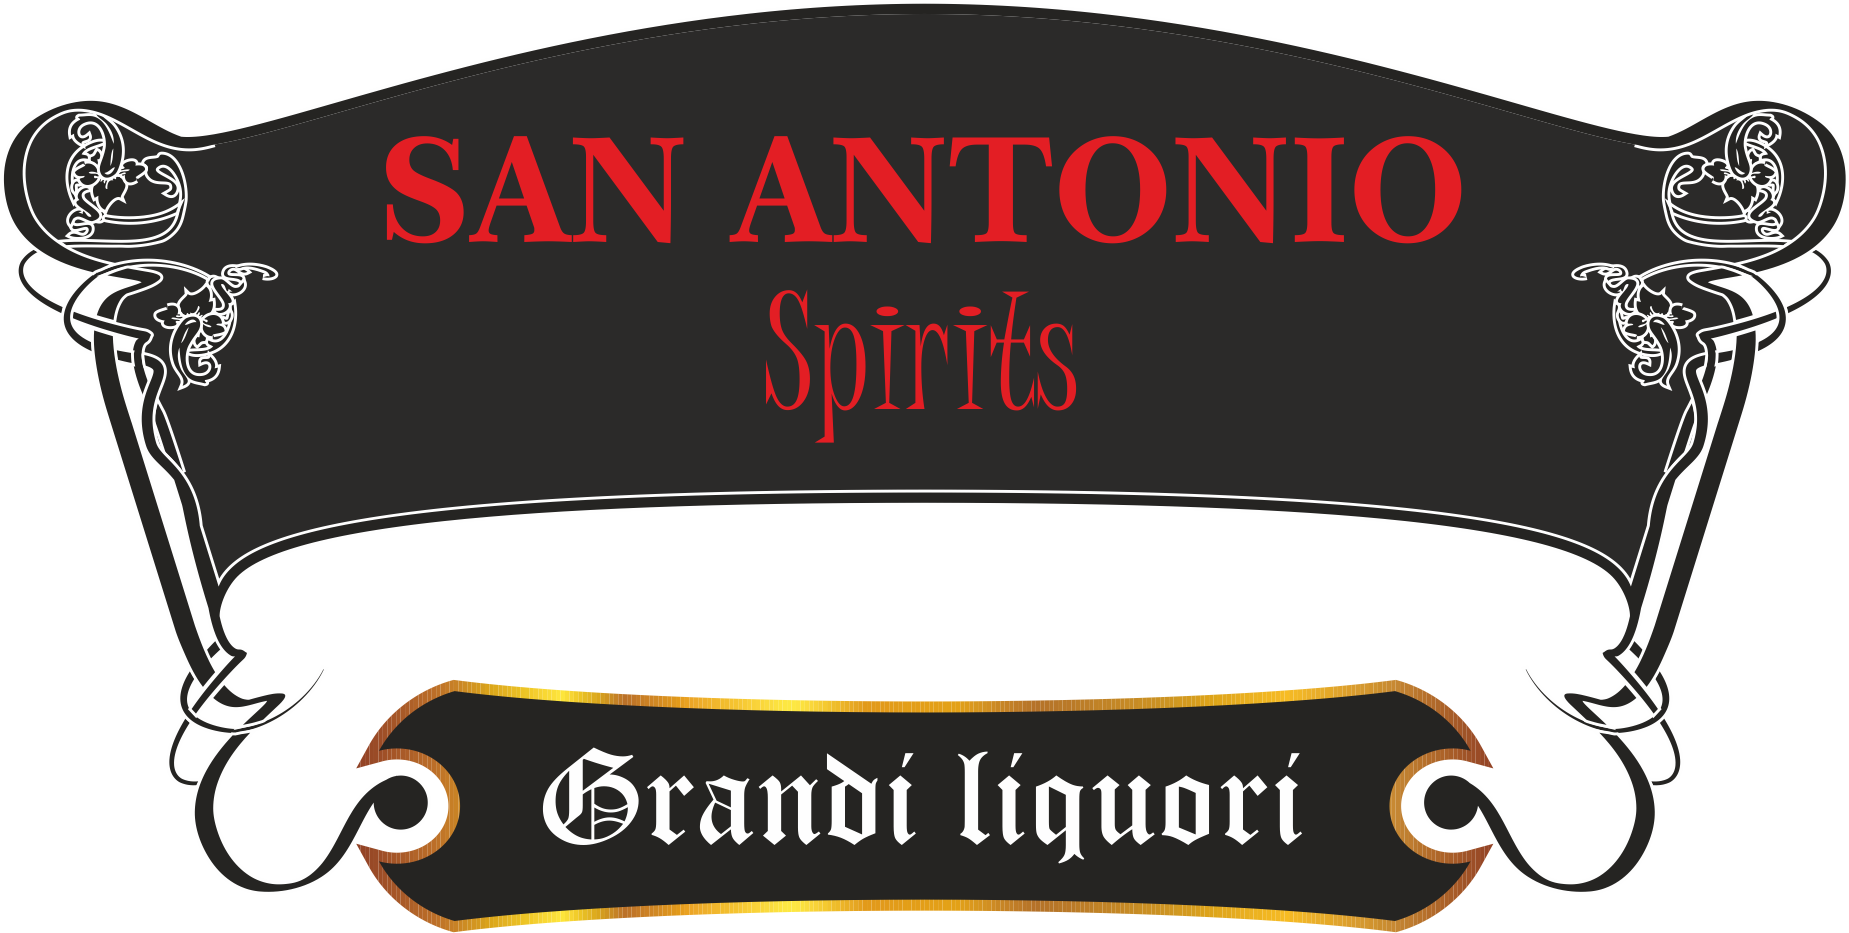 San Antonio Spirits